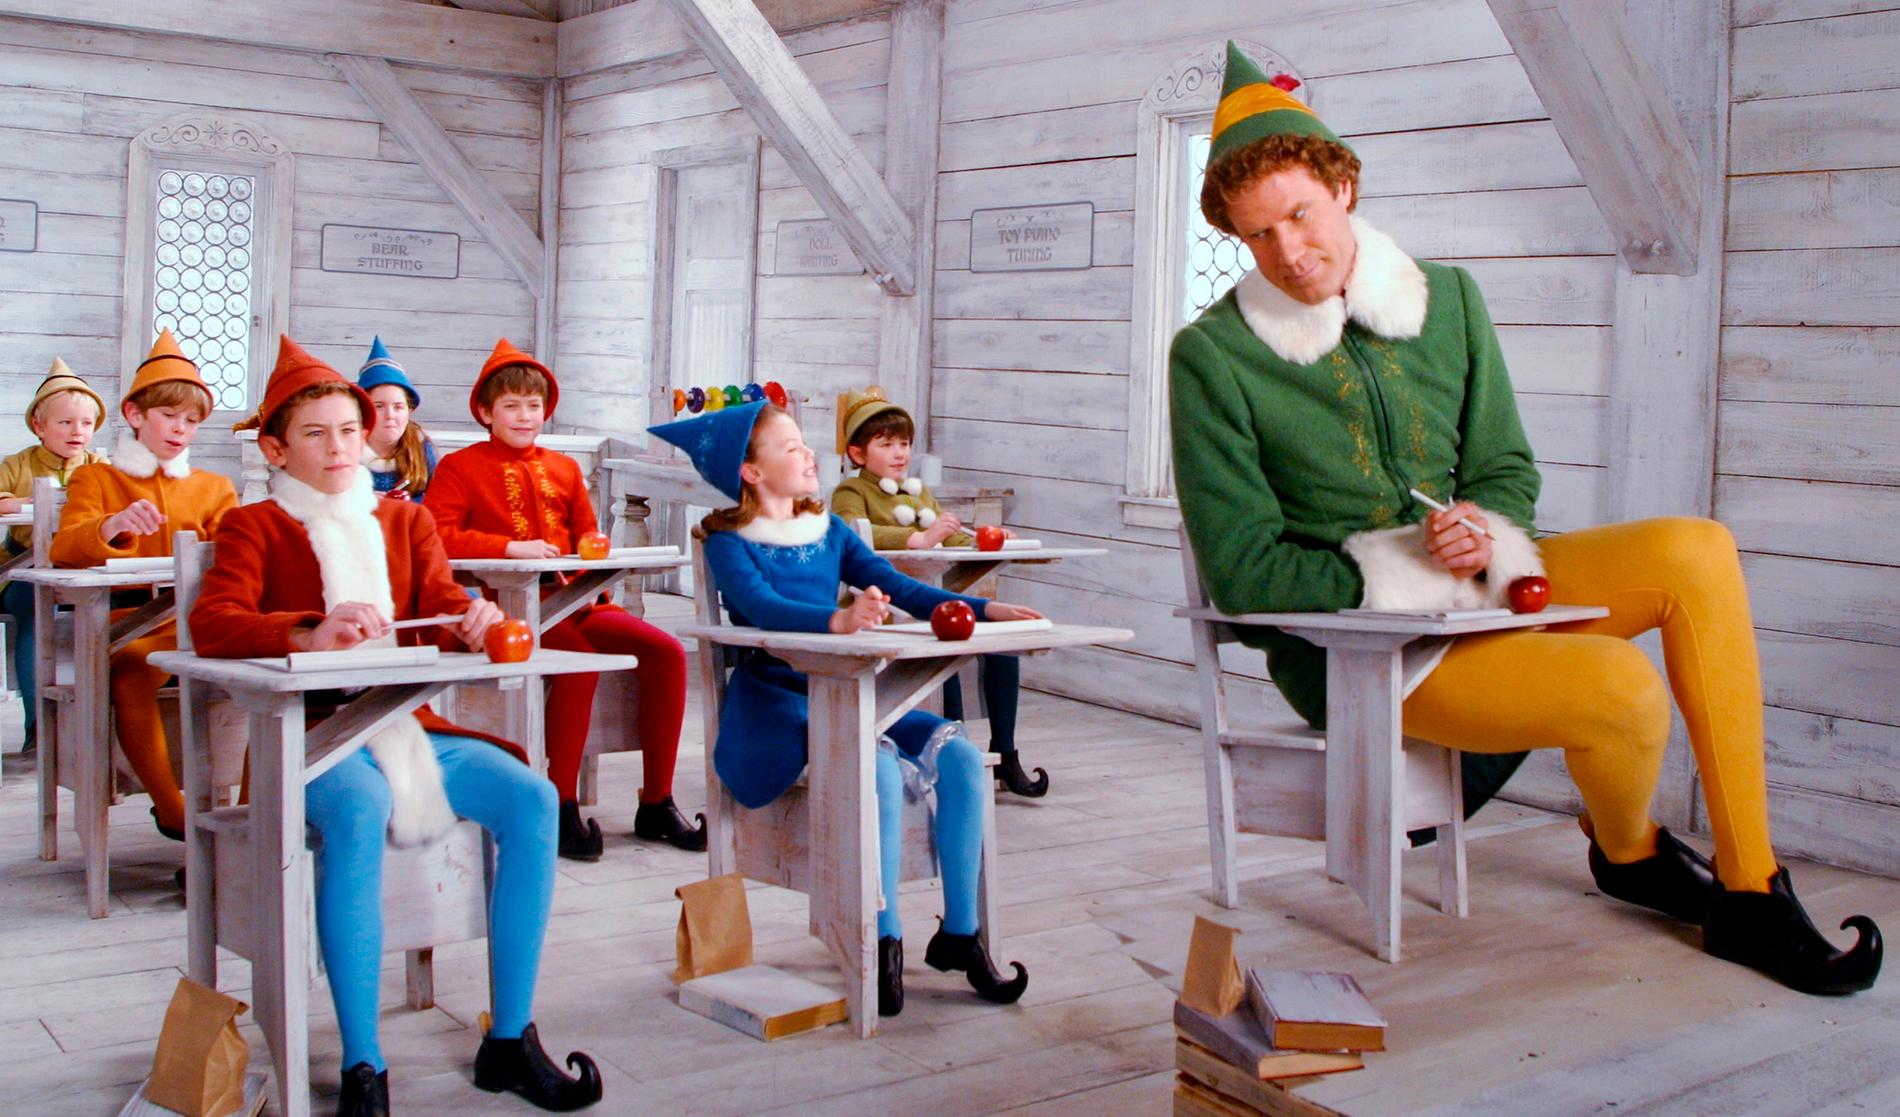 Will Ferrell som tomtenissen Buddy i "Elf". Pressbild.